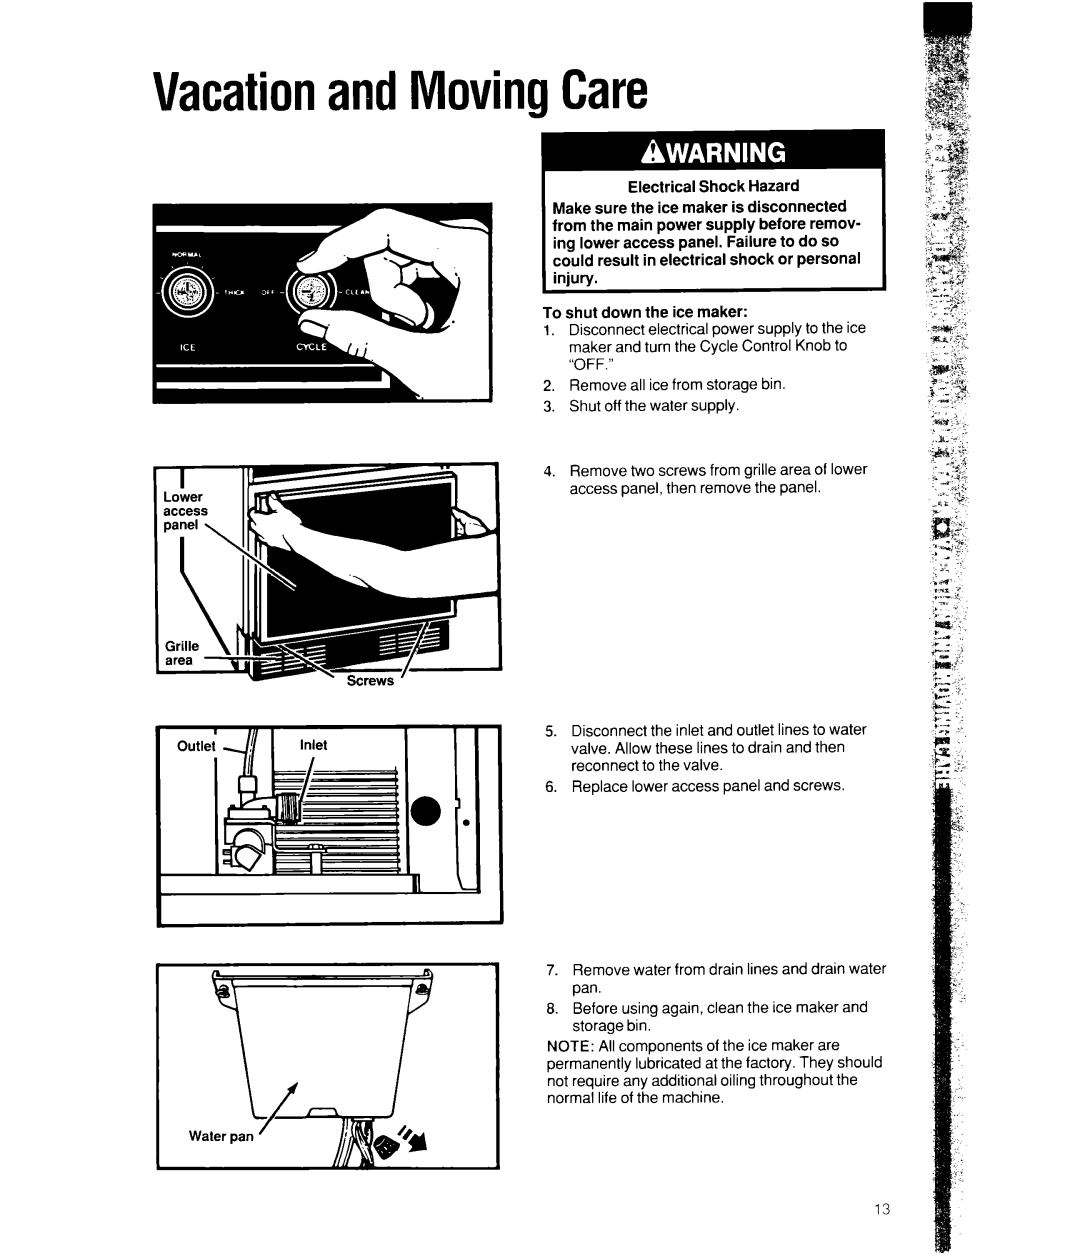 Whirlpool EC510 manual VacationandMovingCare 